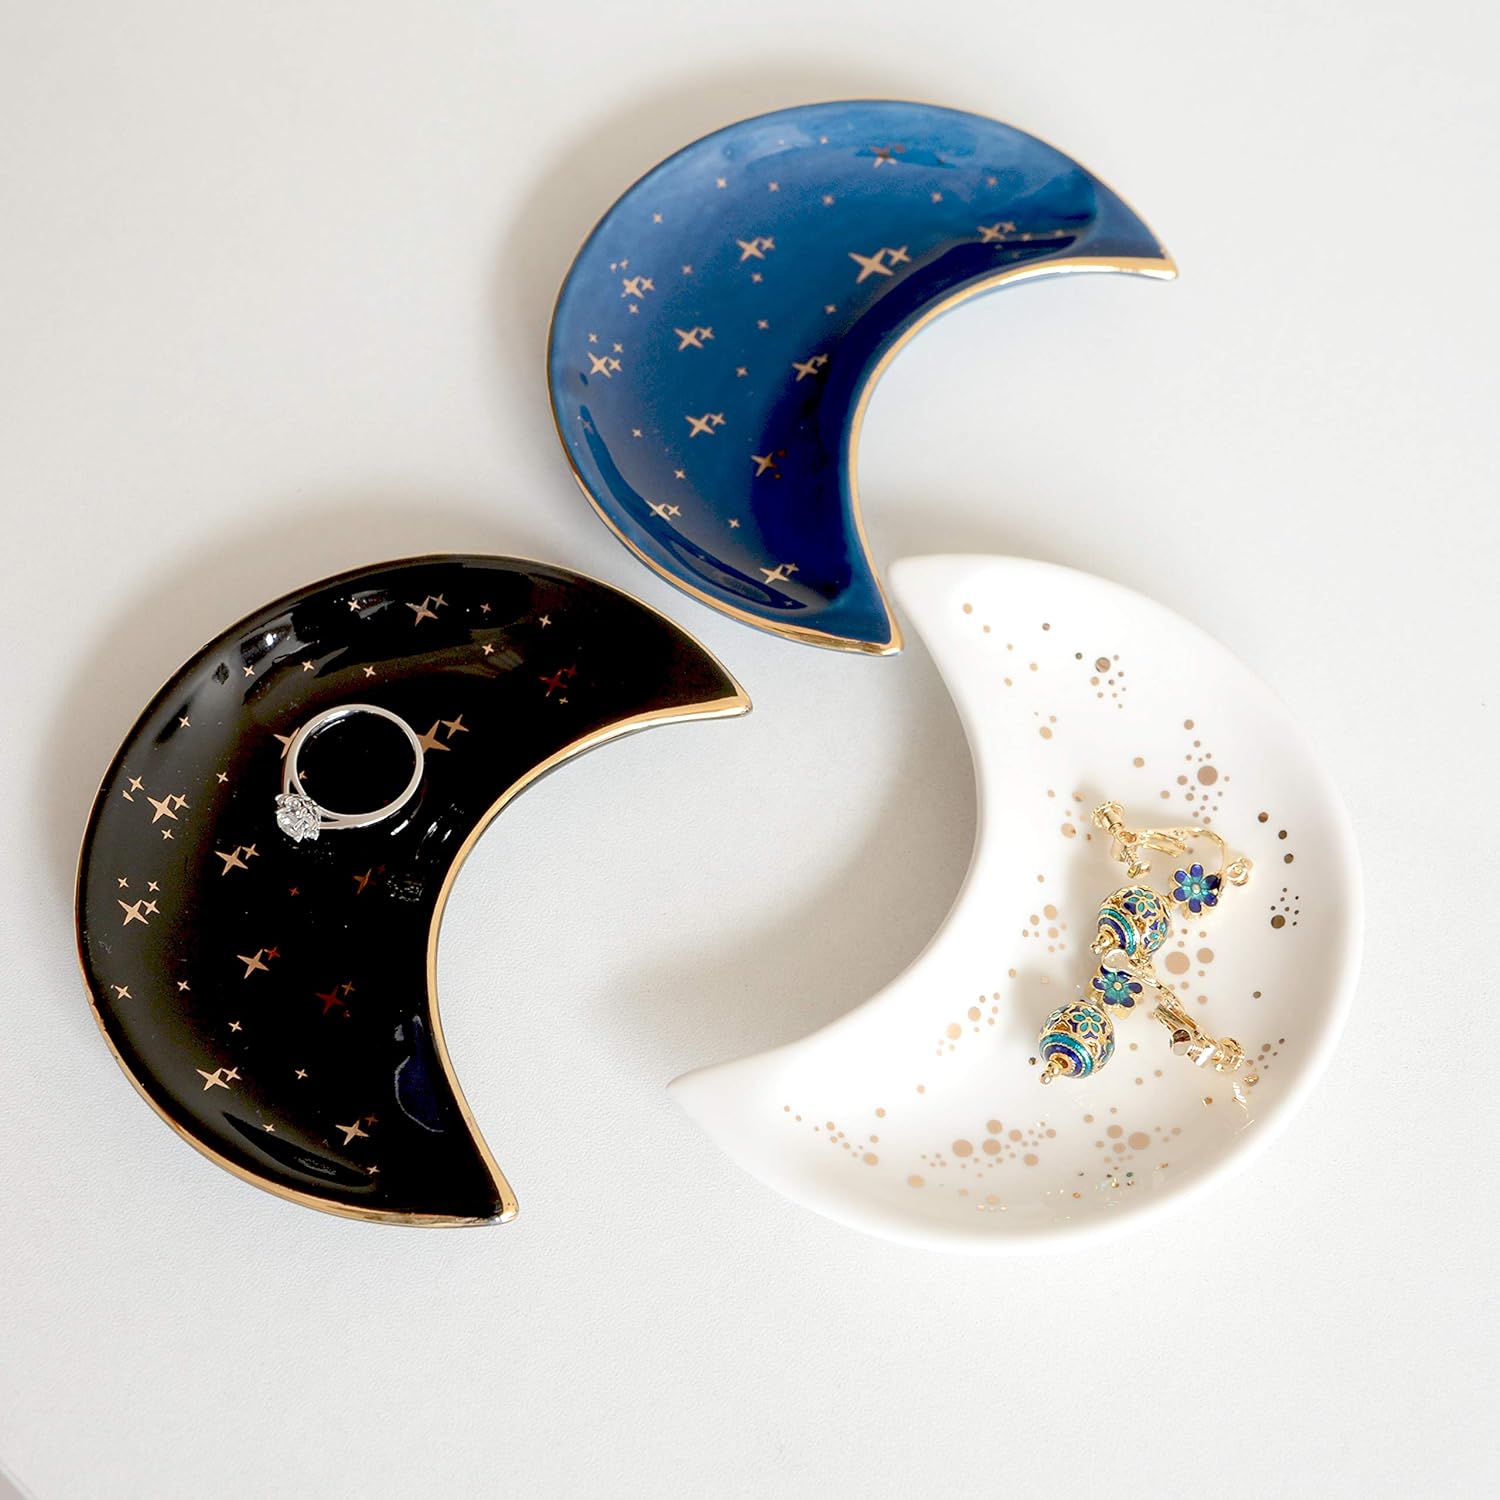 BIHOIB Small Moon Jewelry Dish Tray, Decorative Ceramic Trinket Dish, Modern Accent Tray for Vanity, Blue